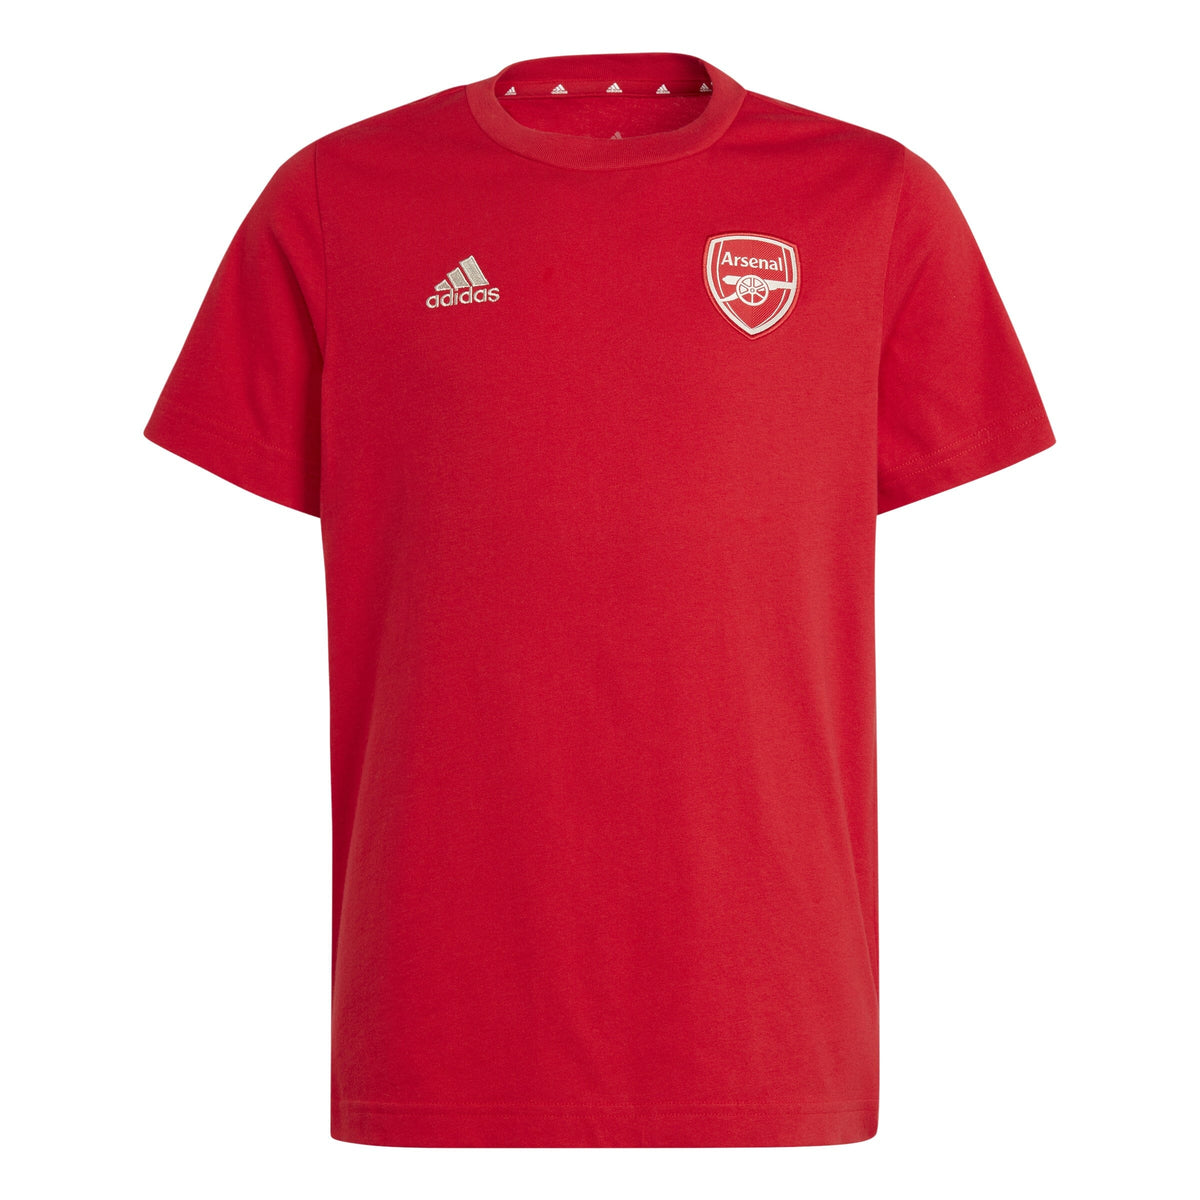 adidas Youth Arsenal FC 23/24 Tee | HZ2058 Shirt Adidas Youth Medium Better Scarlet 